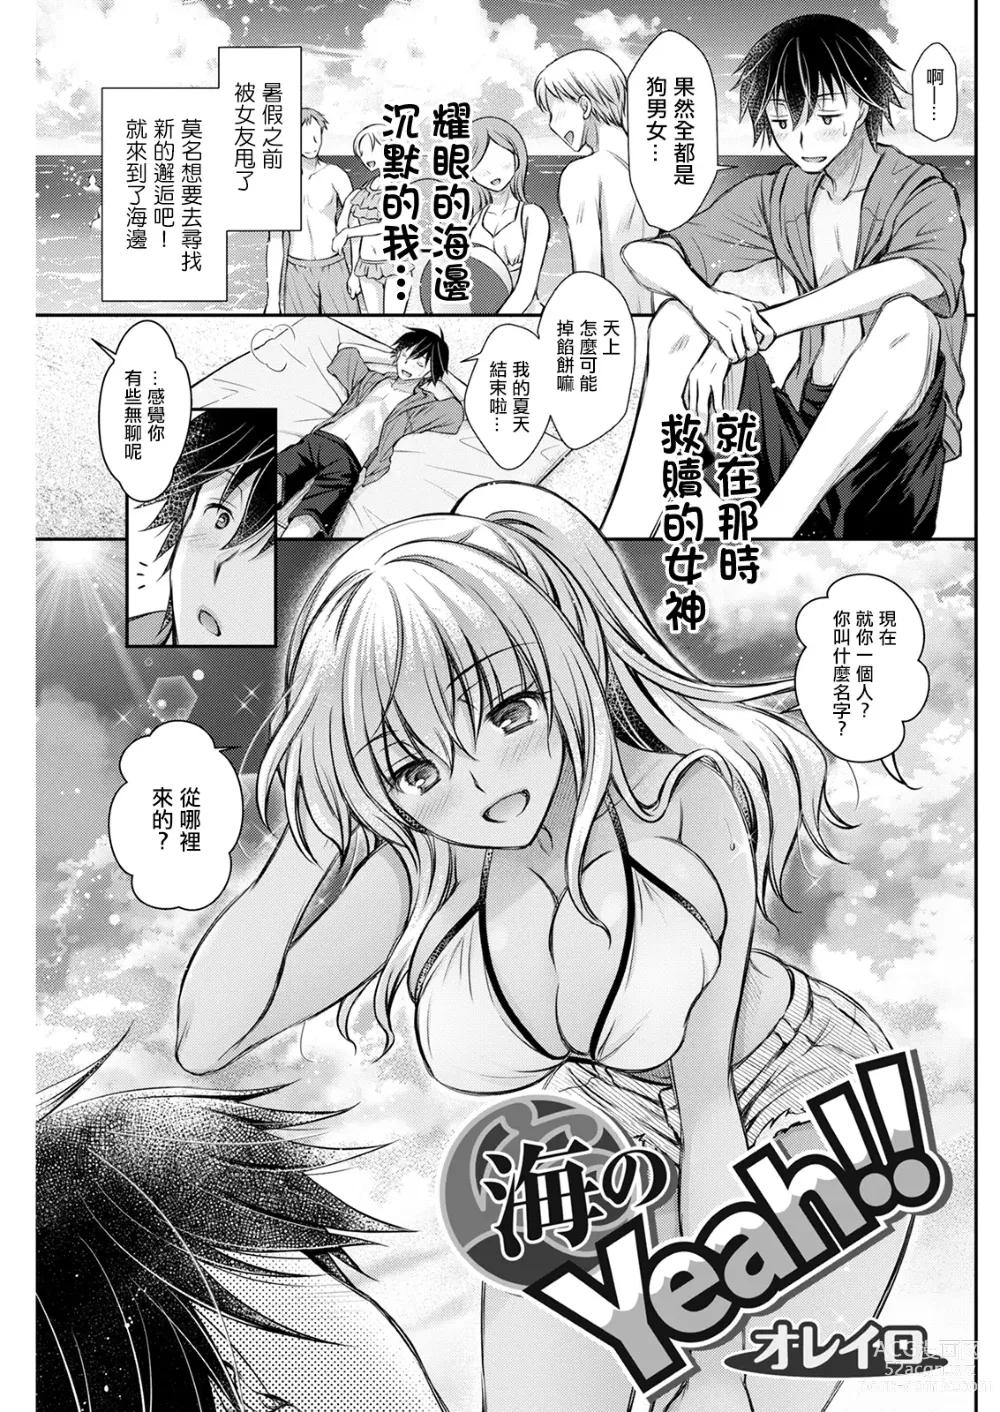 Page 1 of manga Umi no Yeah!!